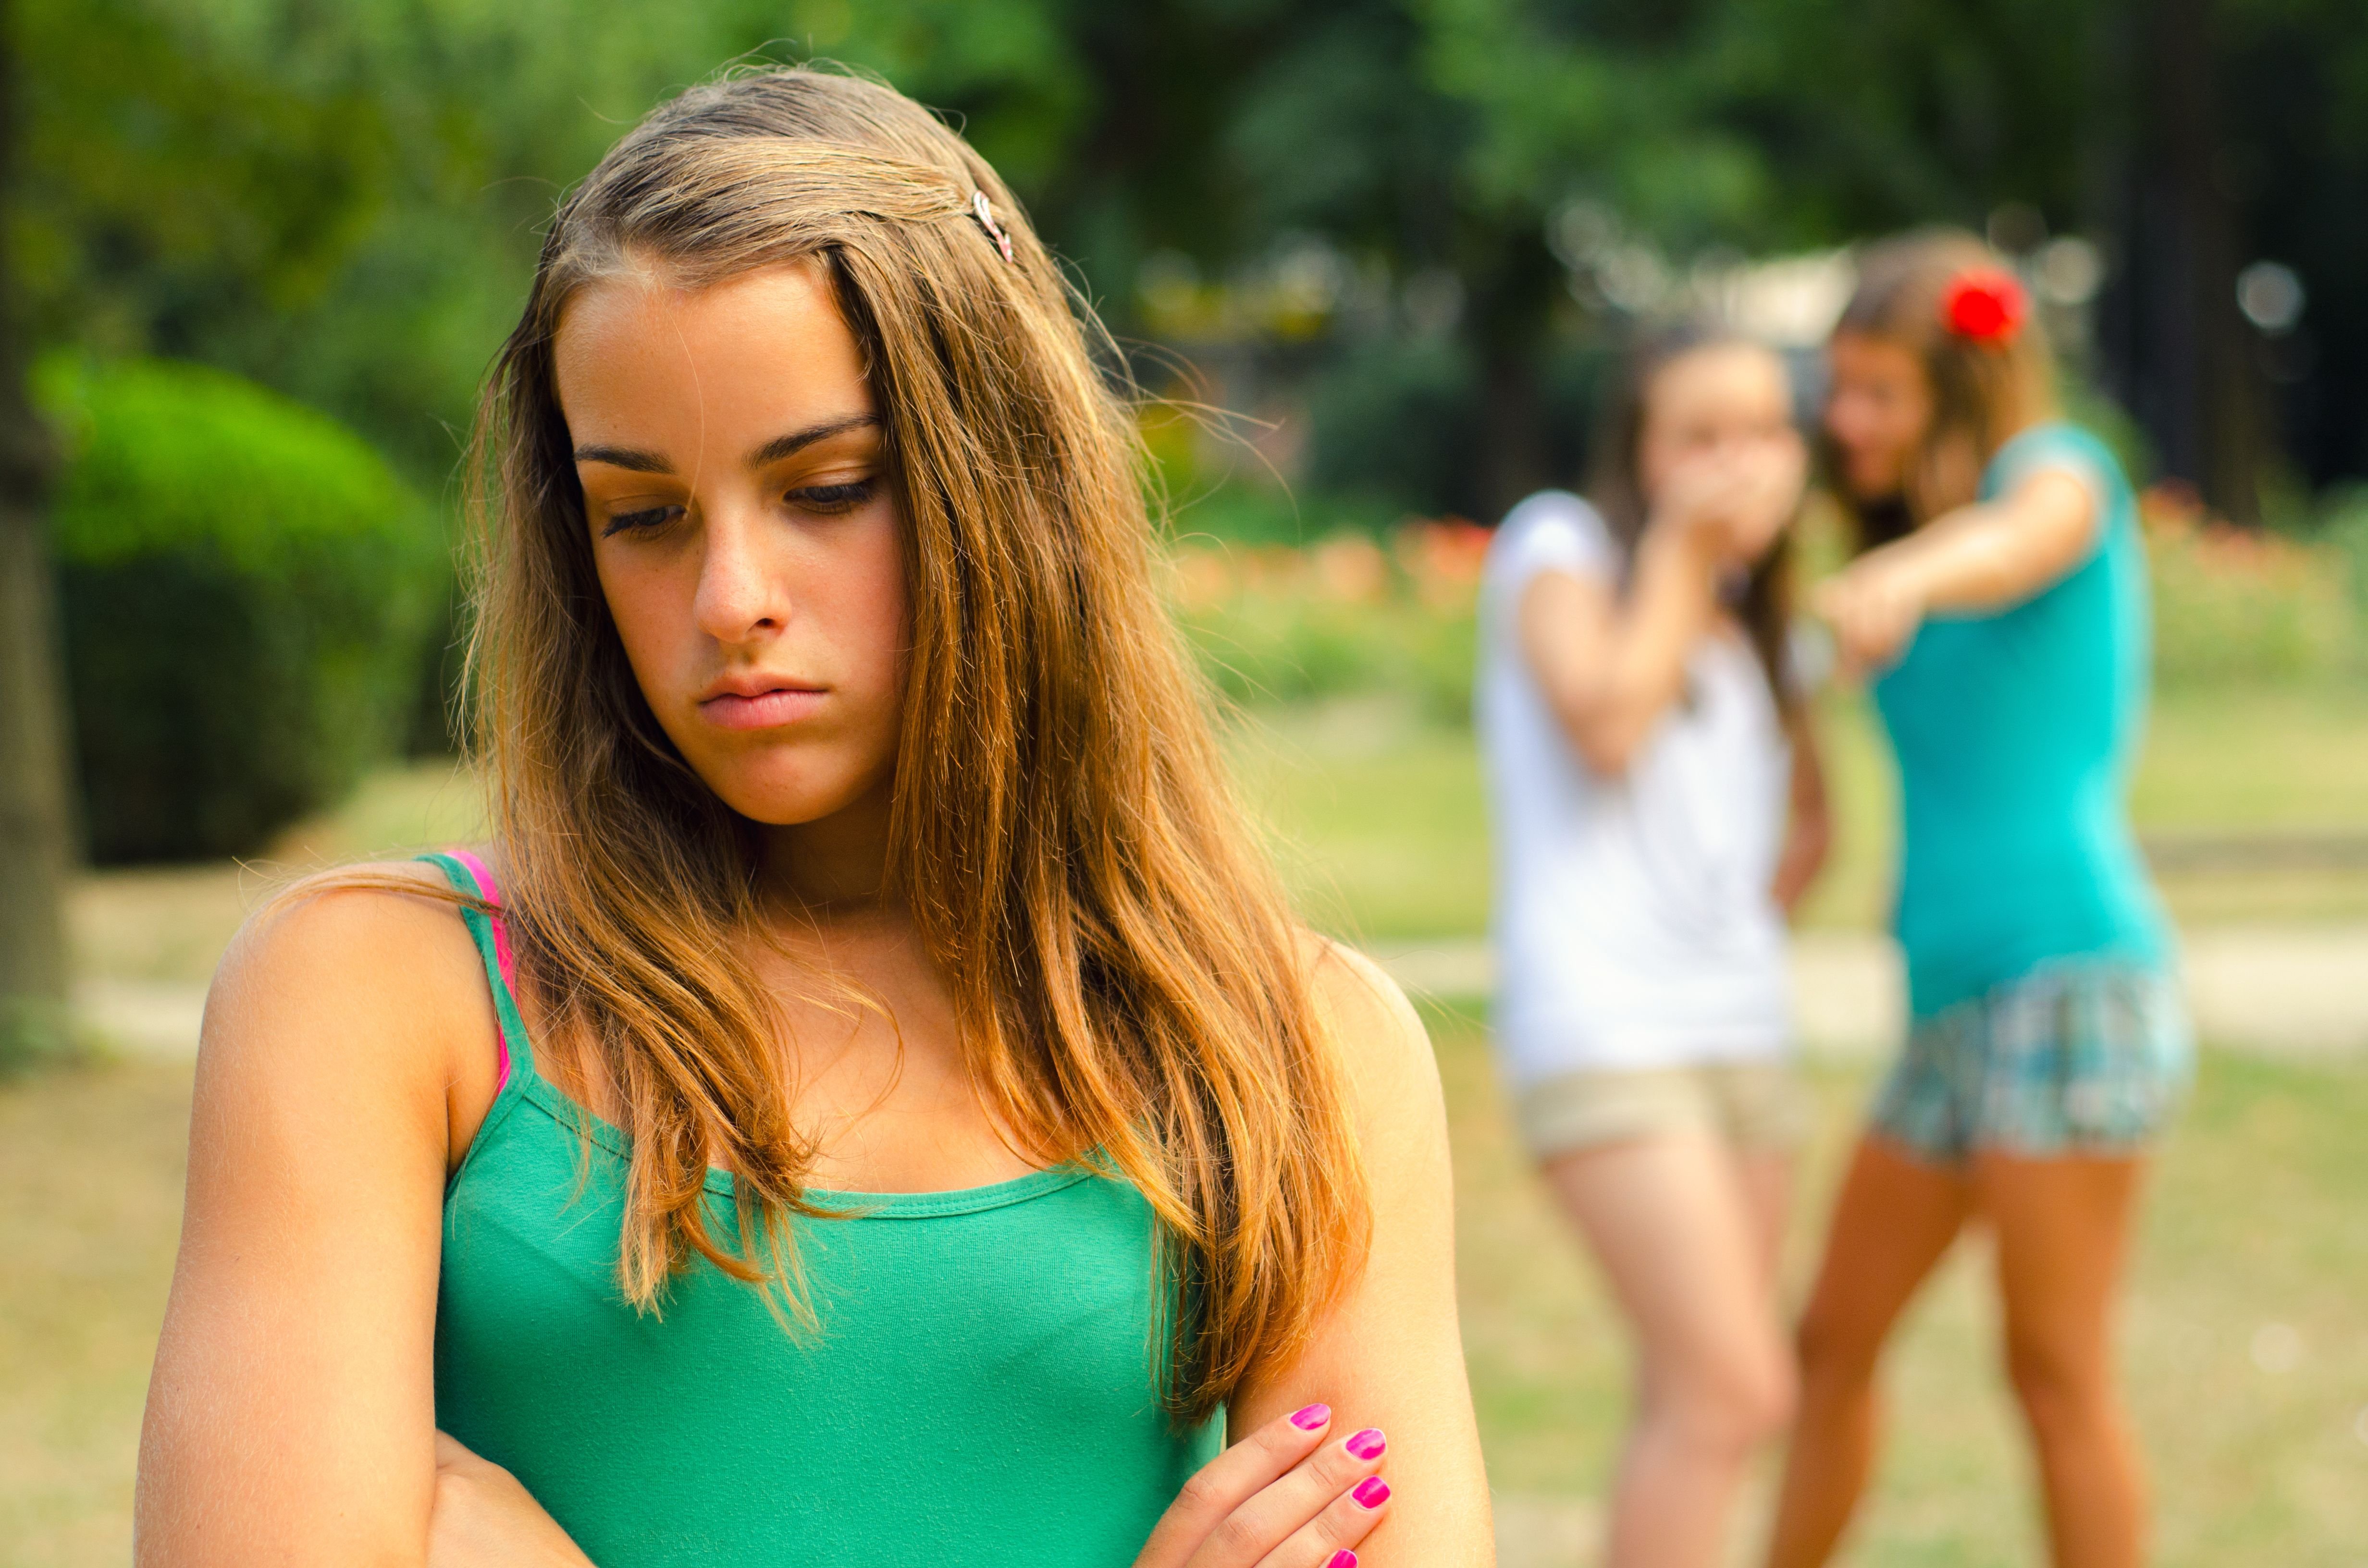 A group of girls bullying a teen. | Source: Shutterstock